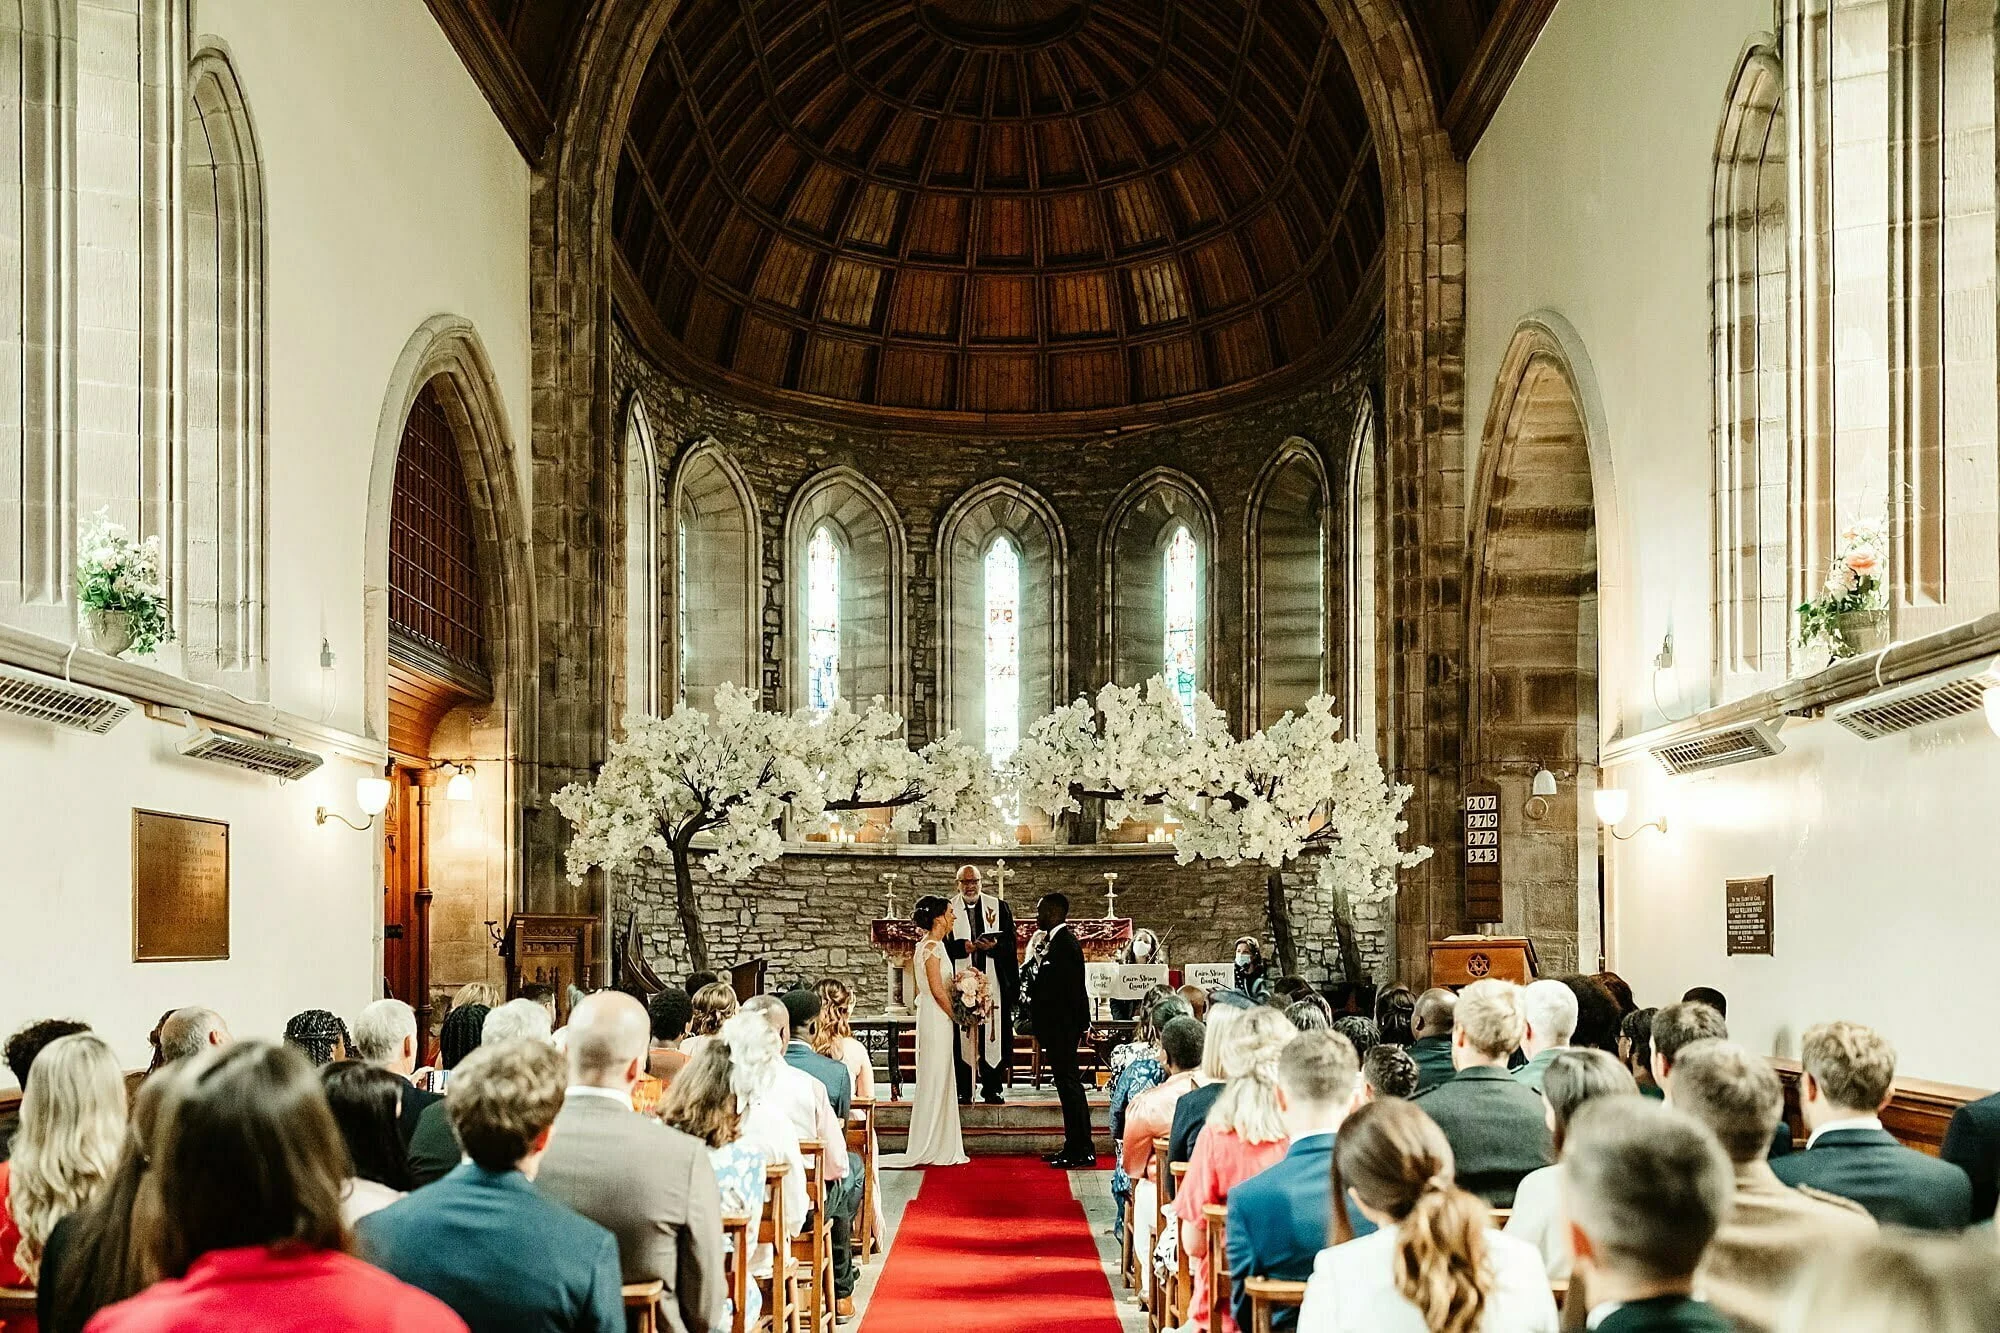 summer drumtochty castle wedding church St Palladius interior inside kim dalglish floral arch